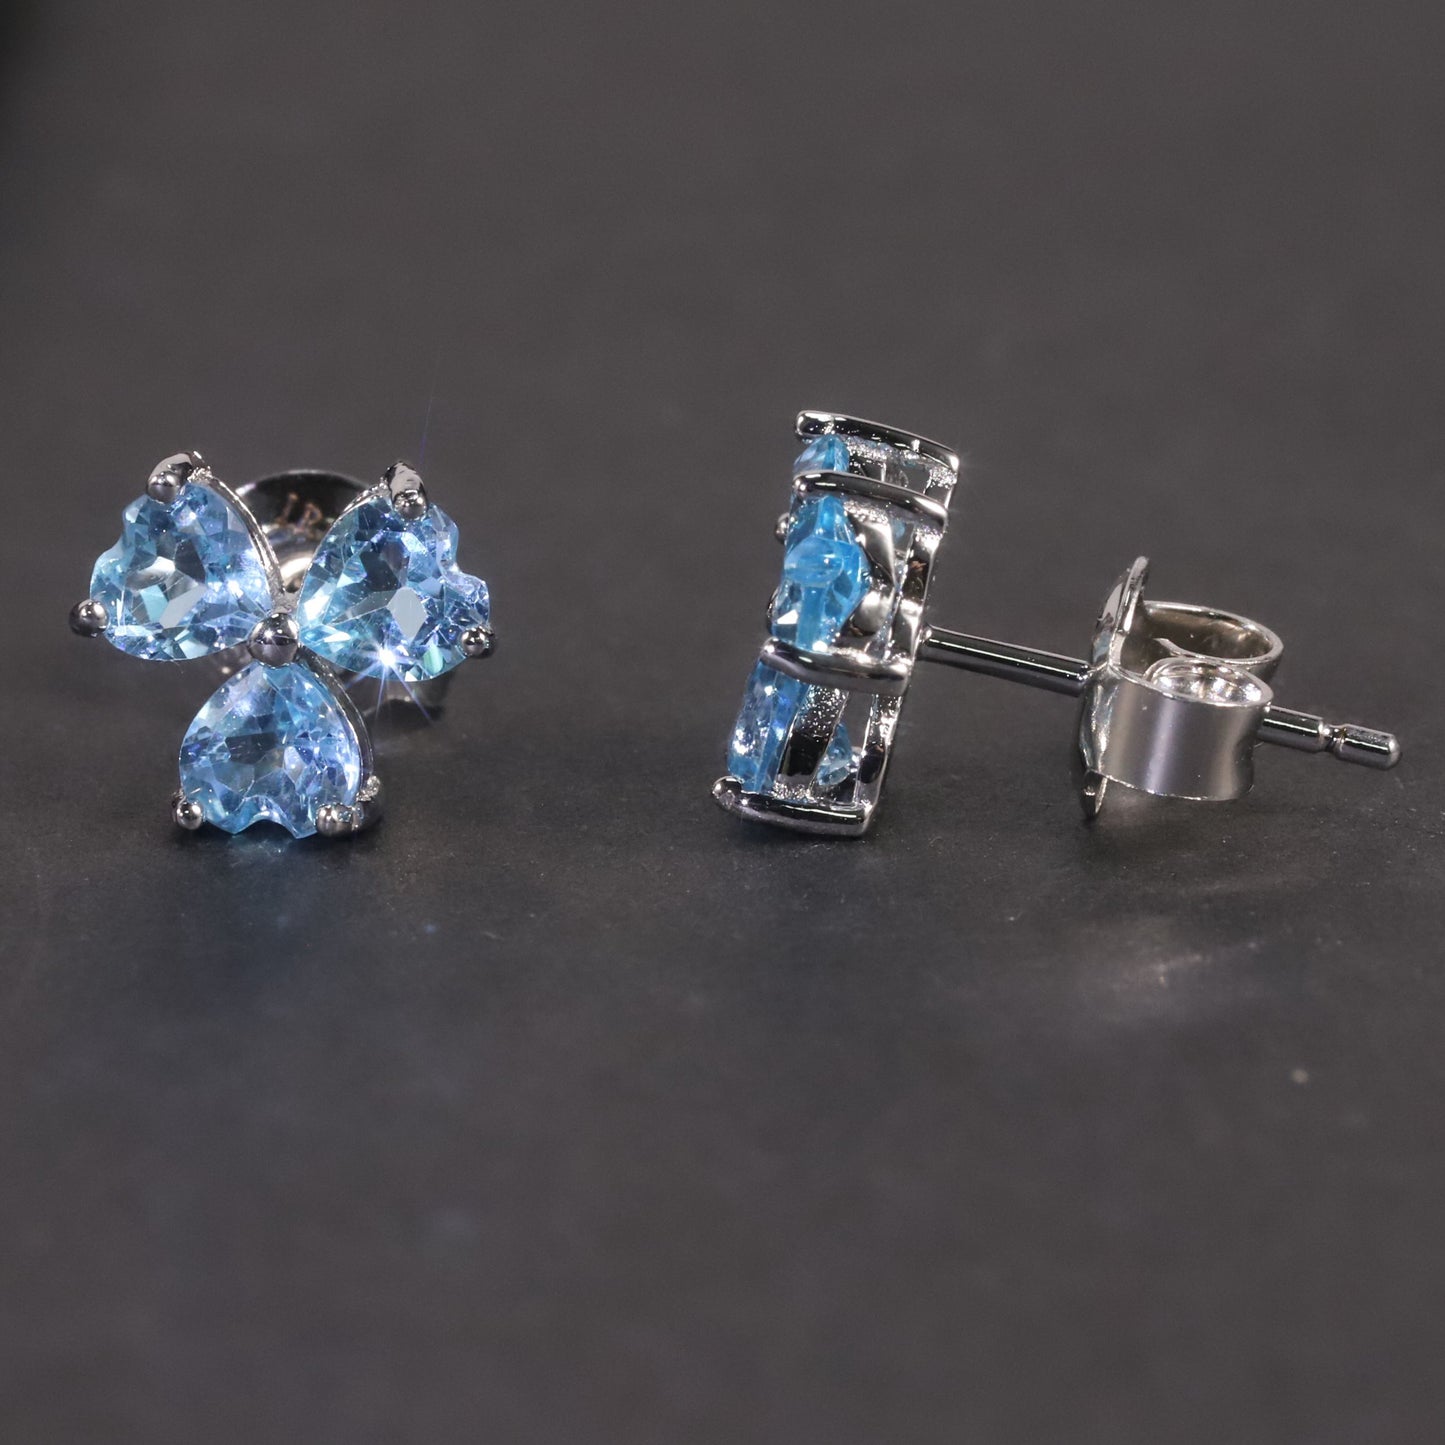 Flower Shape Stud Earrings in Sterling Silver -  Aquamarine